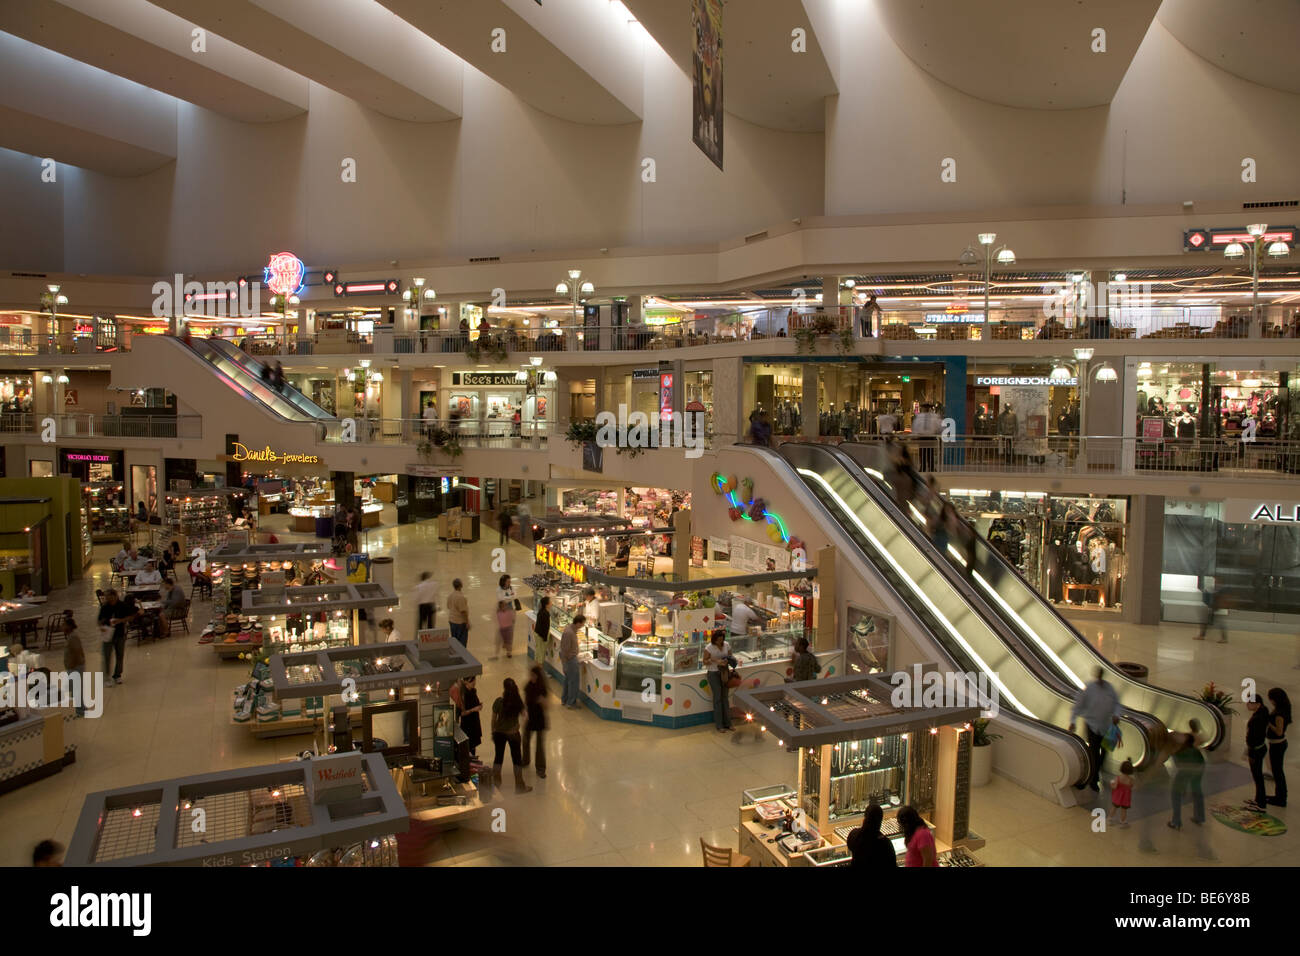 Shopping Mall Interior And Shops Los Angeles California USA Stock Photo: 25968667 - Alamy